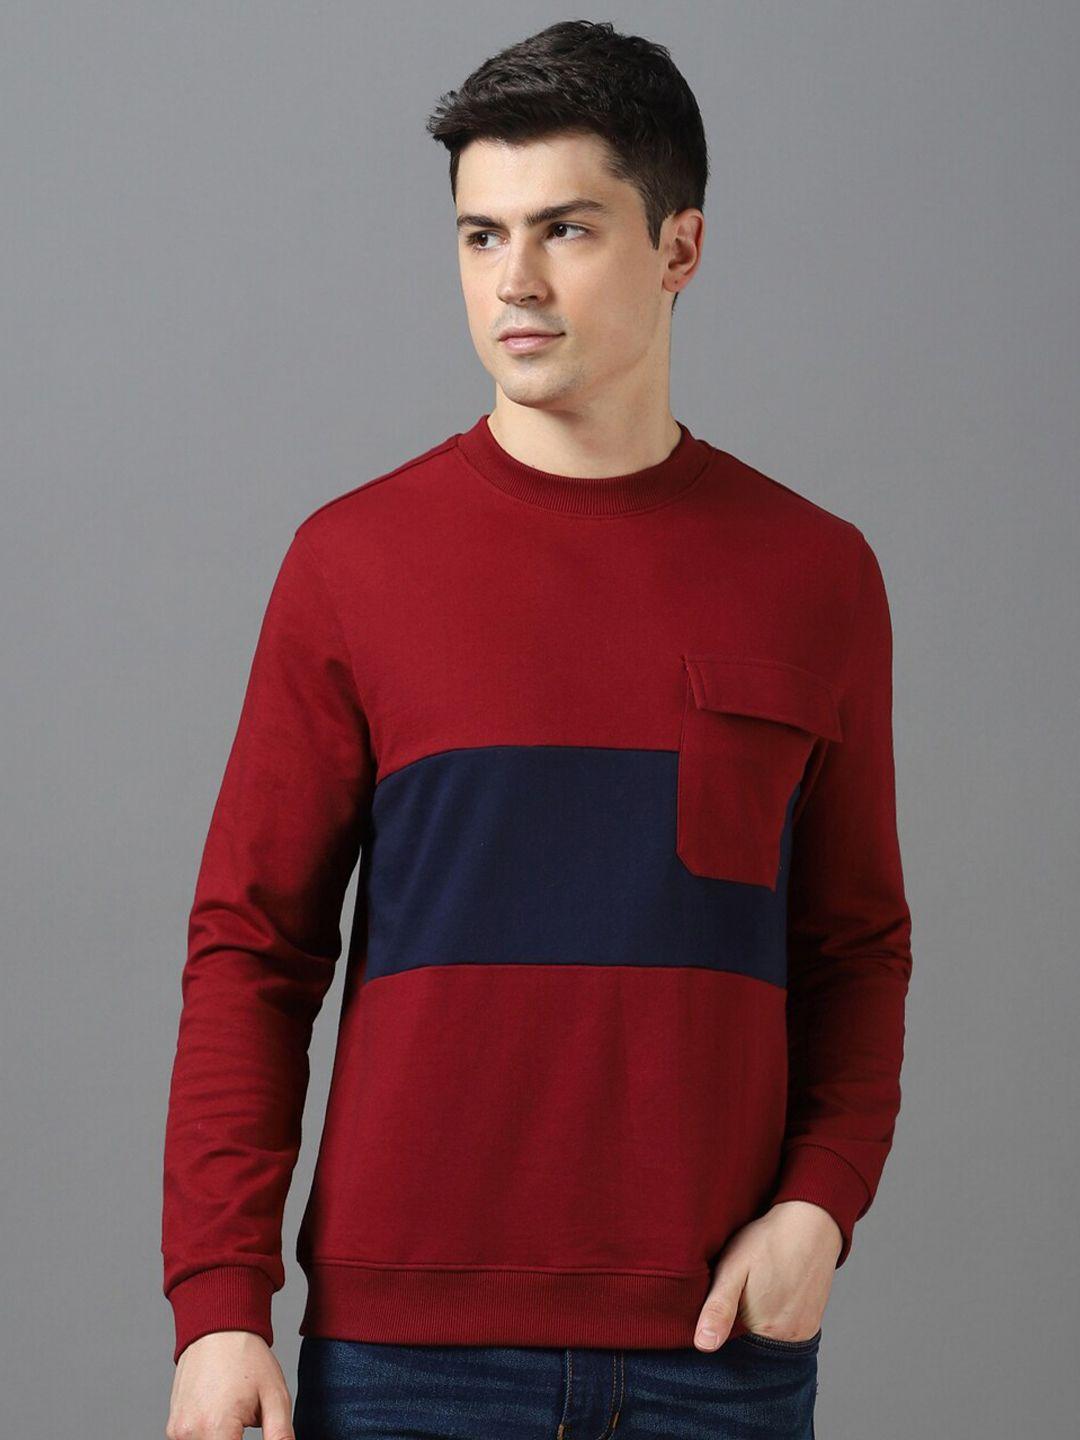 urbano fashion colourblocked pullover sweatshirt